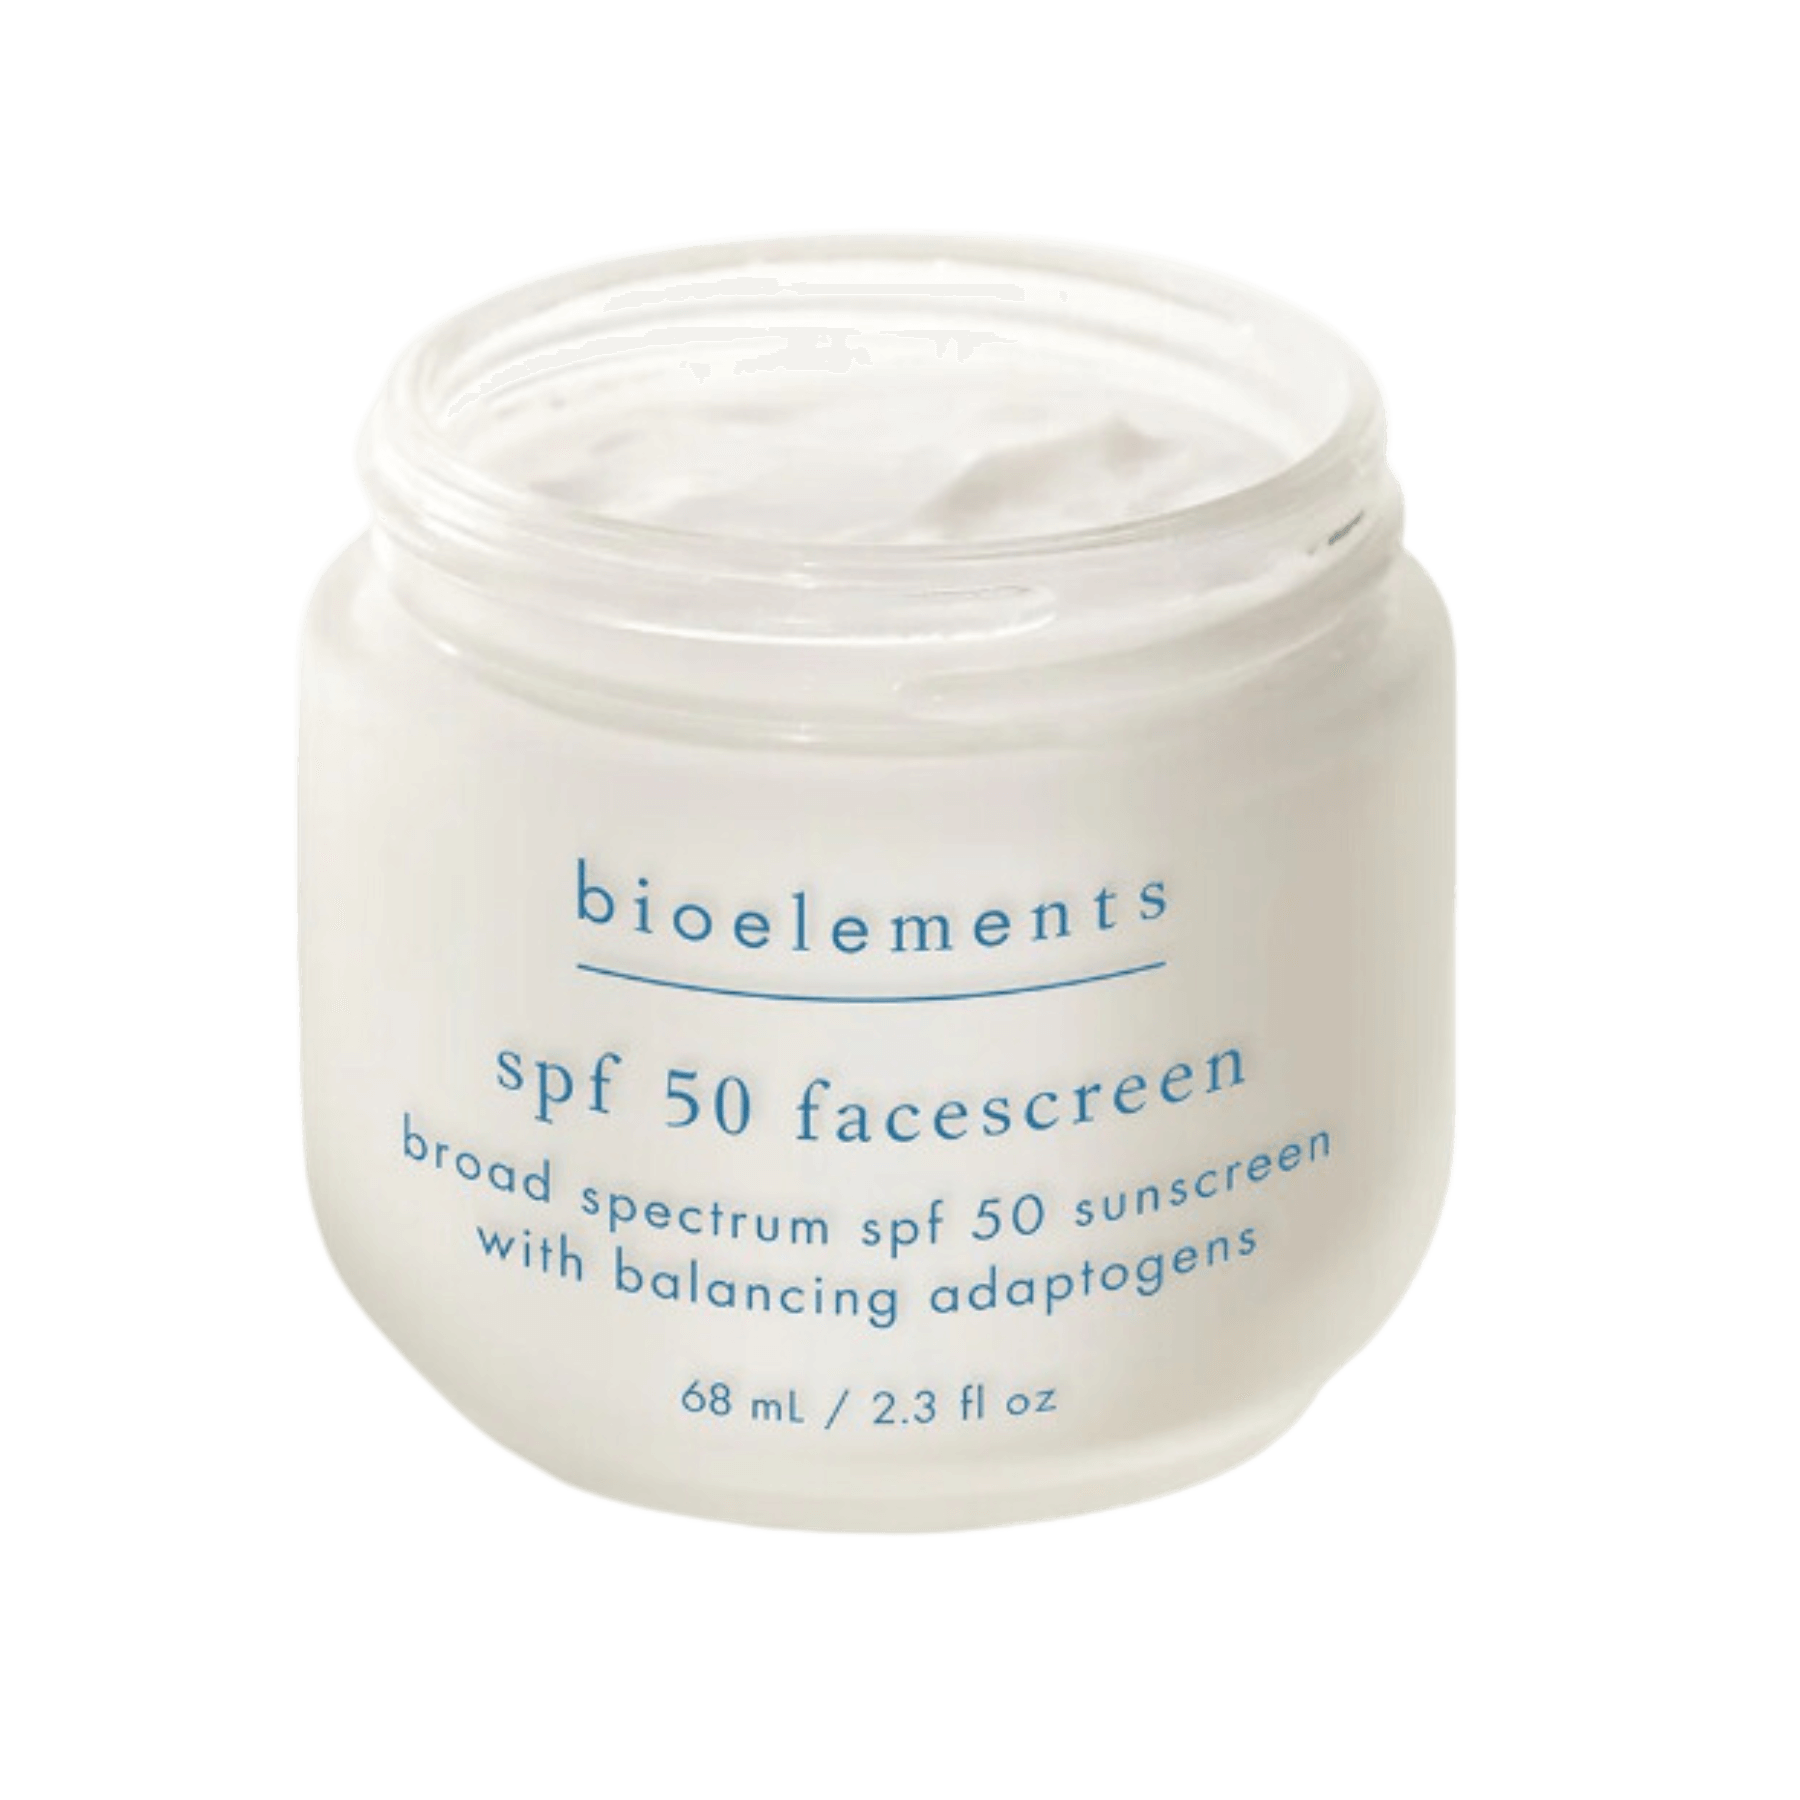 Bioelements SPF 50 Facescreen